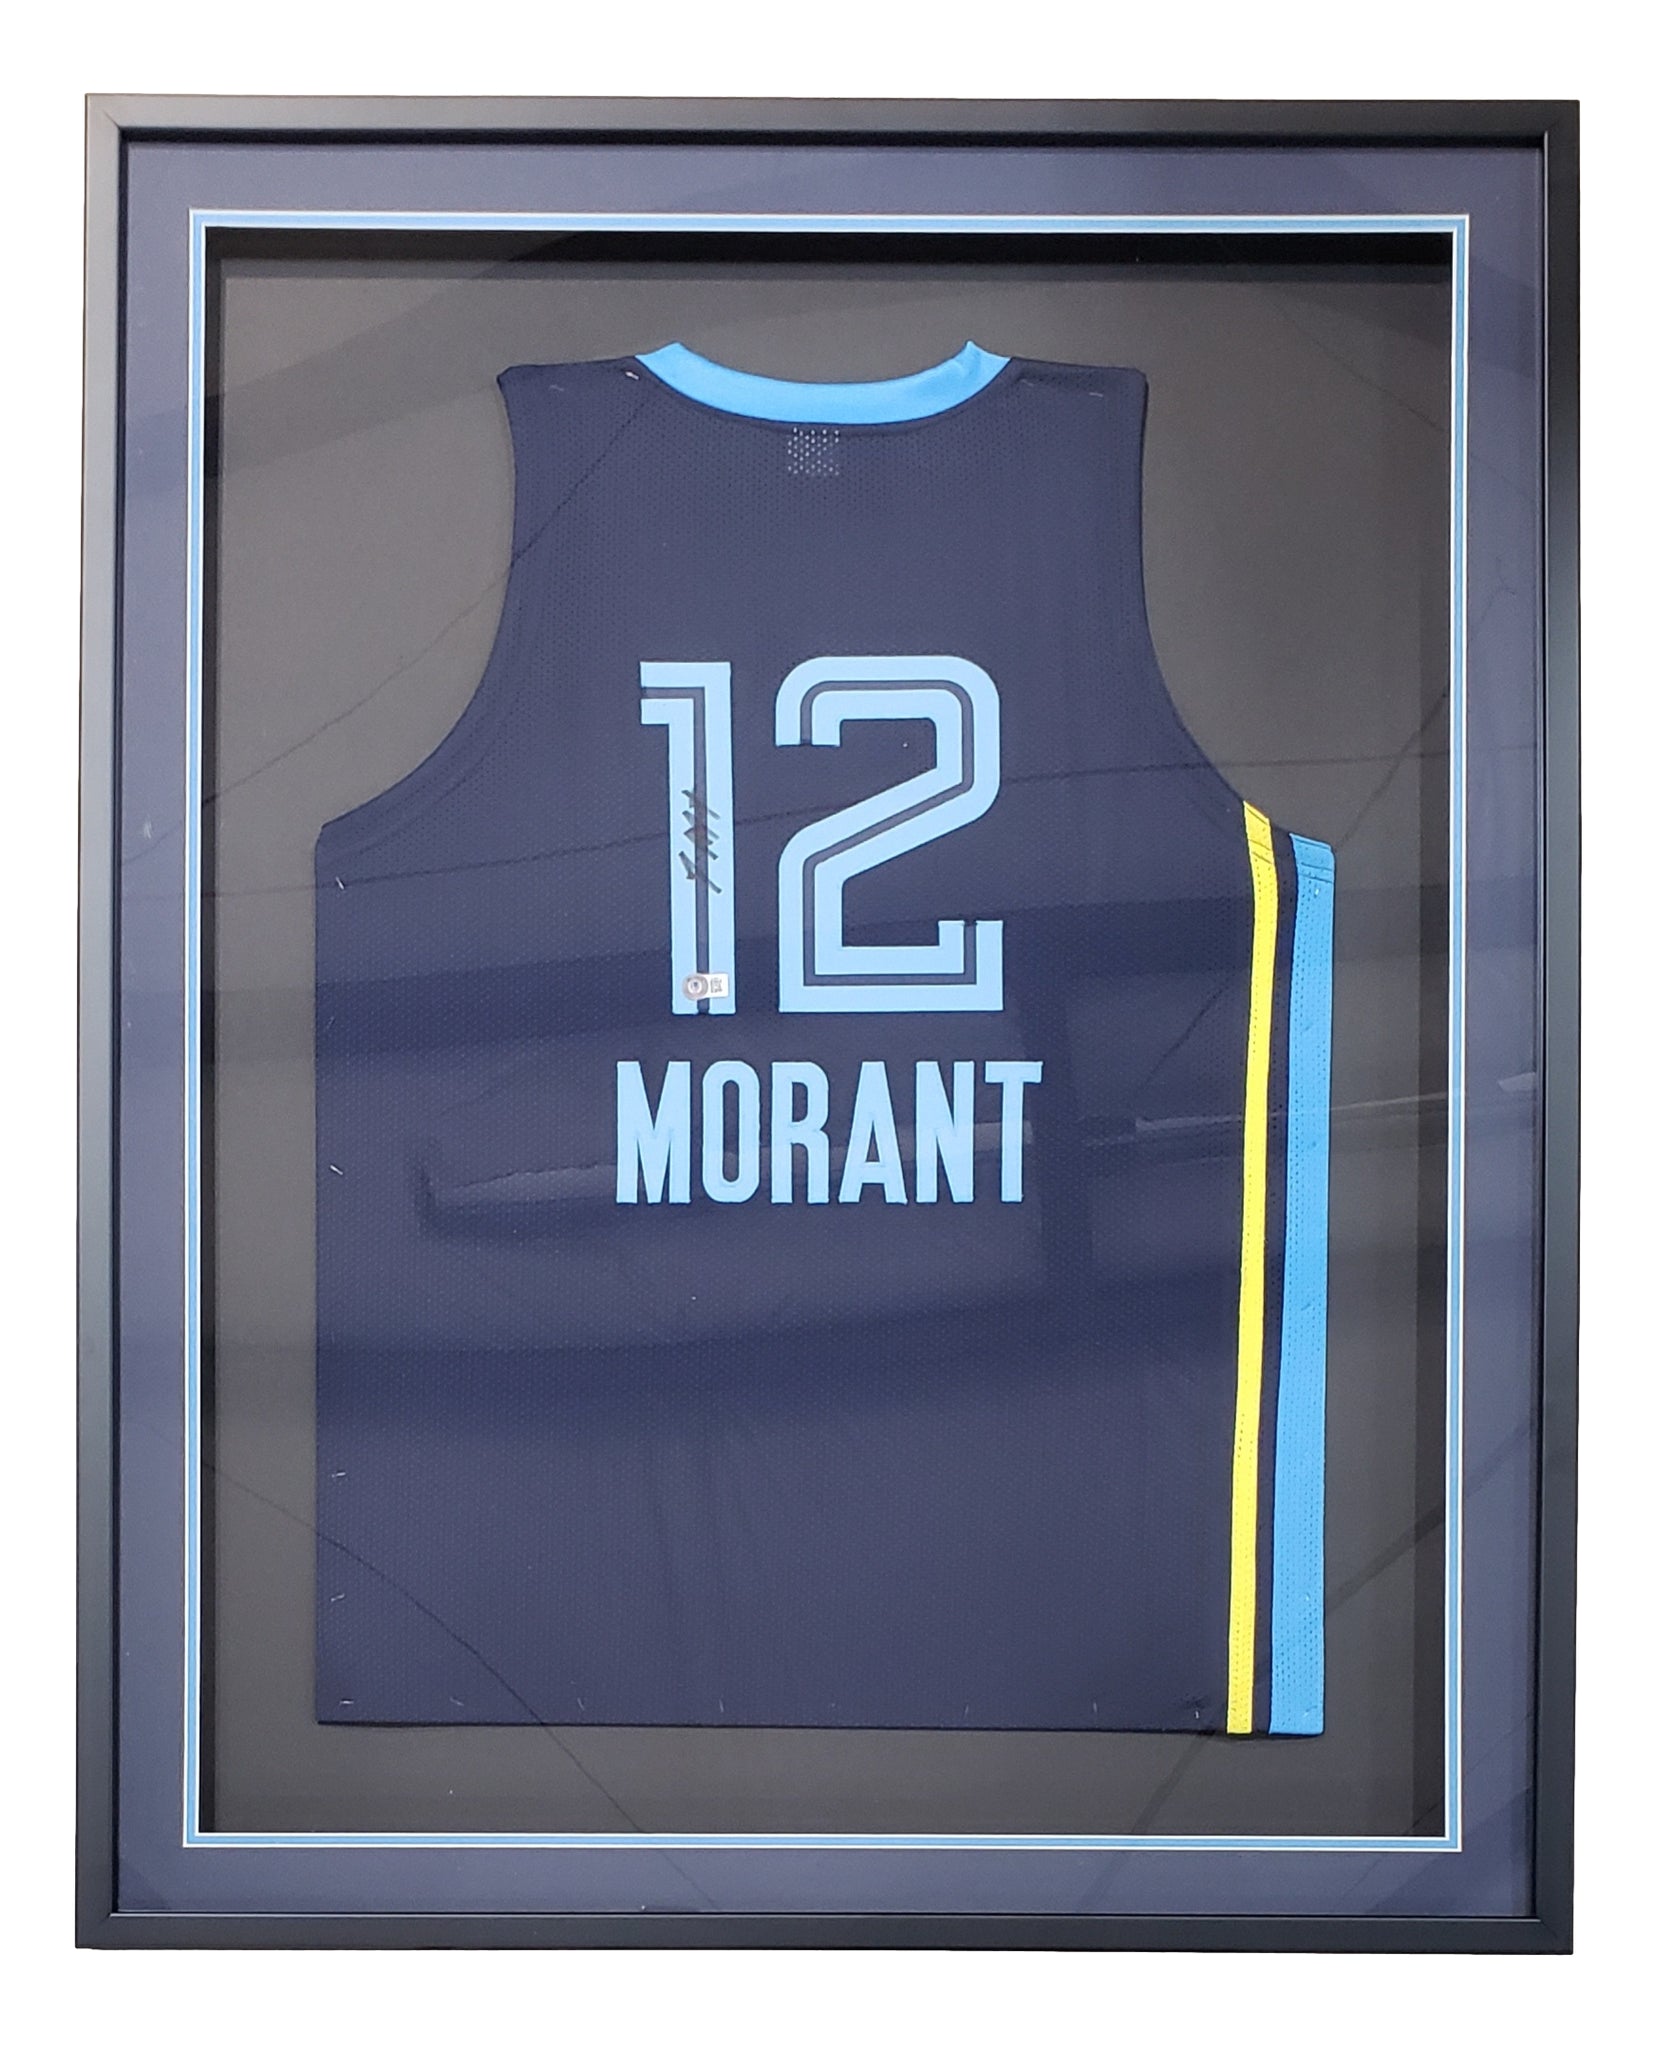 Ja Morant  Ja morant style, Cool basketball wallpapers, Grizzlies jersey